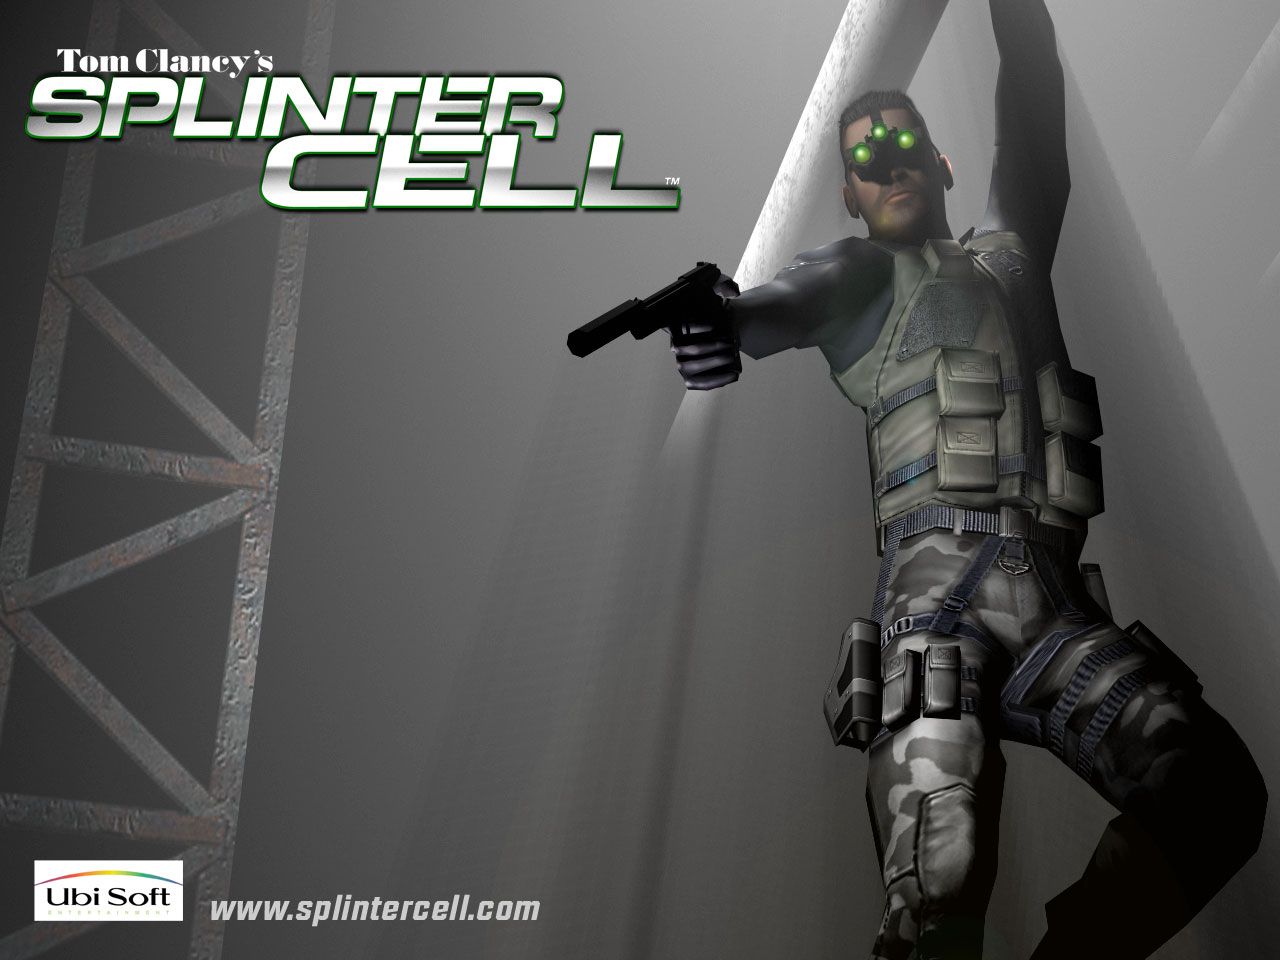 اسپلینتر سل تام کلنسی (Tom Clancy's Splinter Cell)